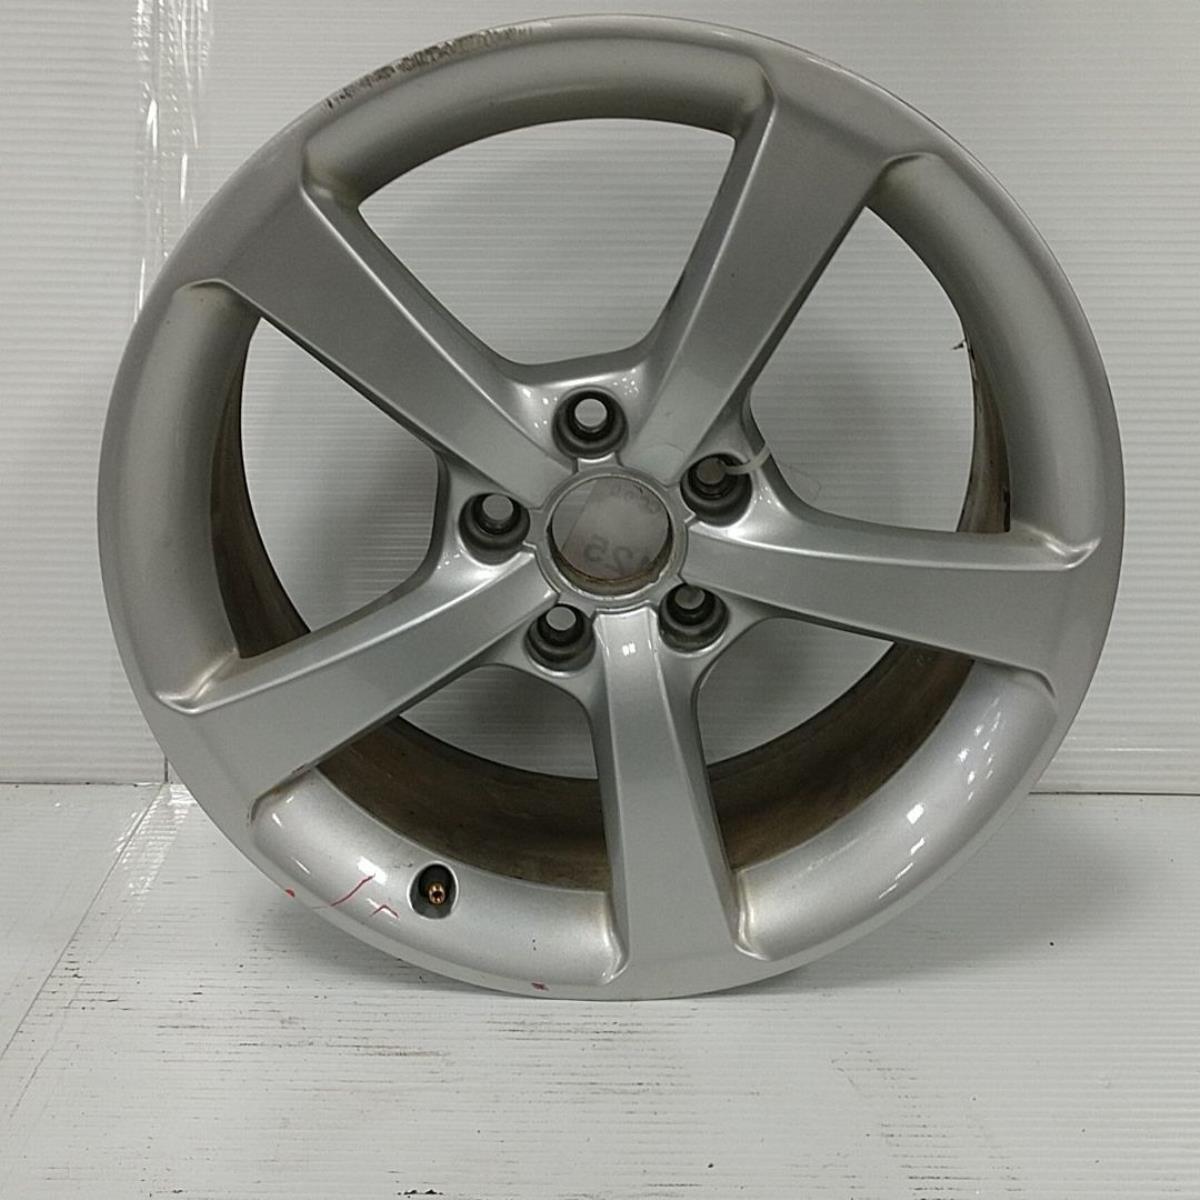 OEM (1) Wheel Rim For Audi A3 Alloy W-Tpms B Grade Edge Chew